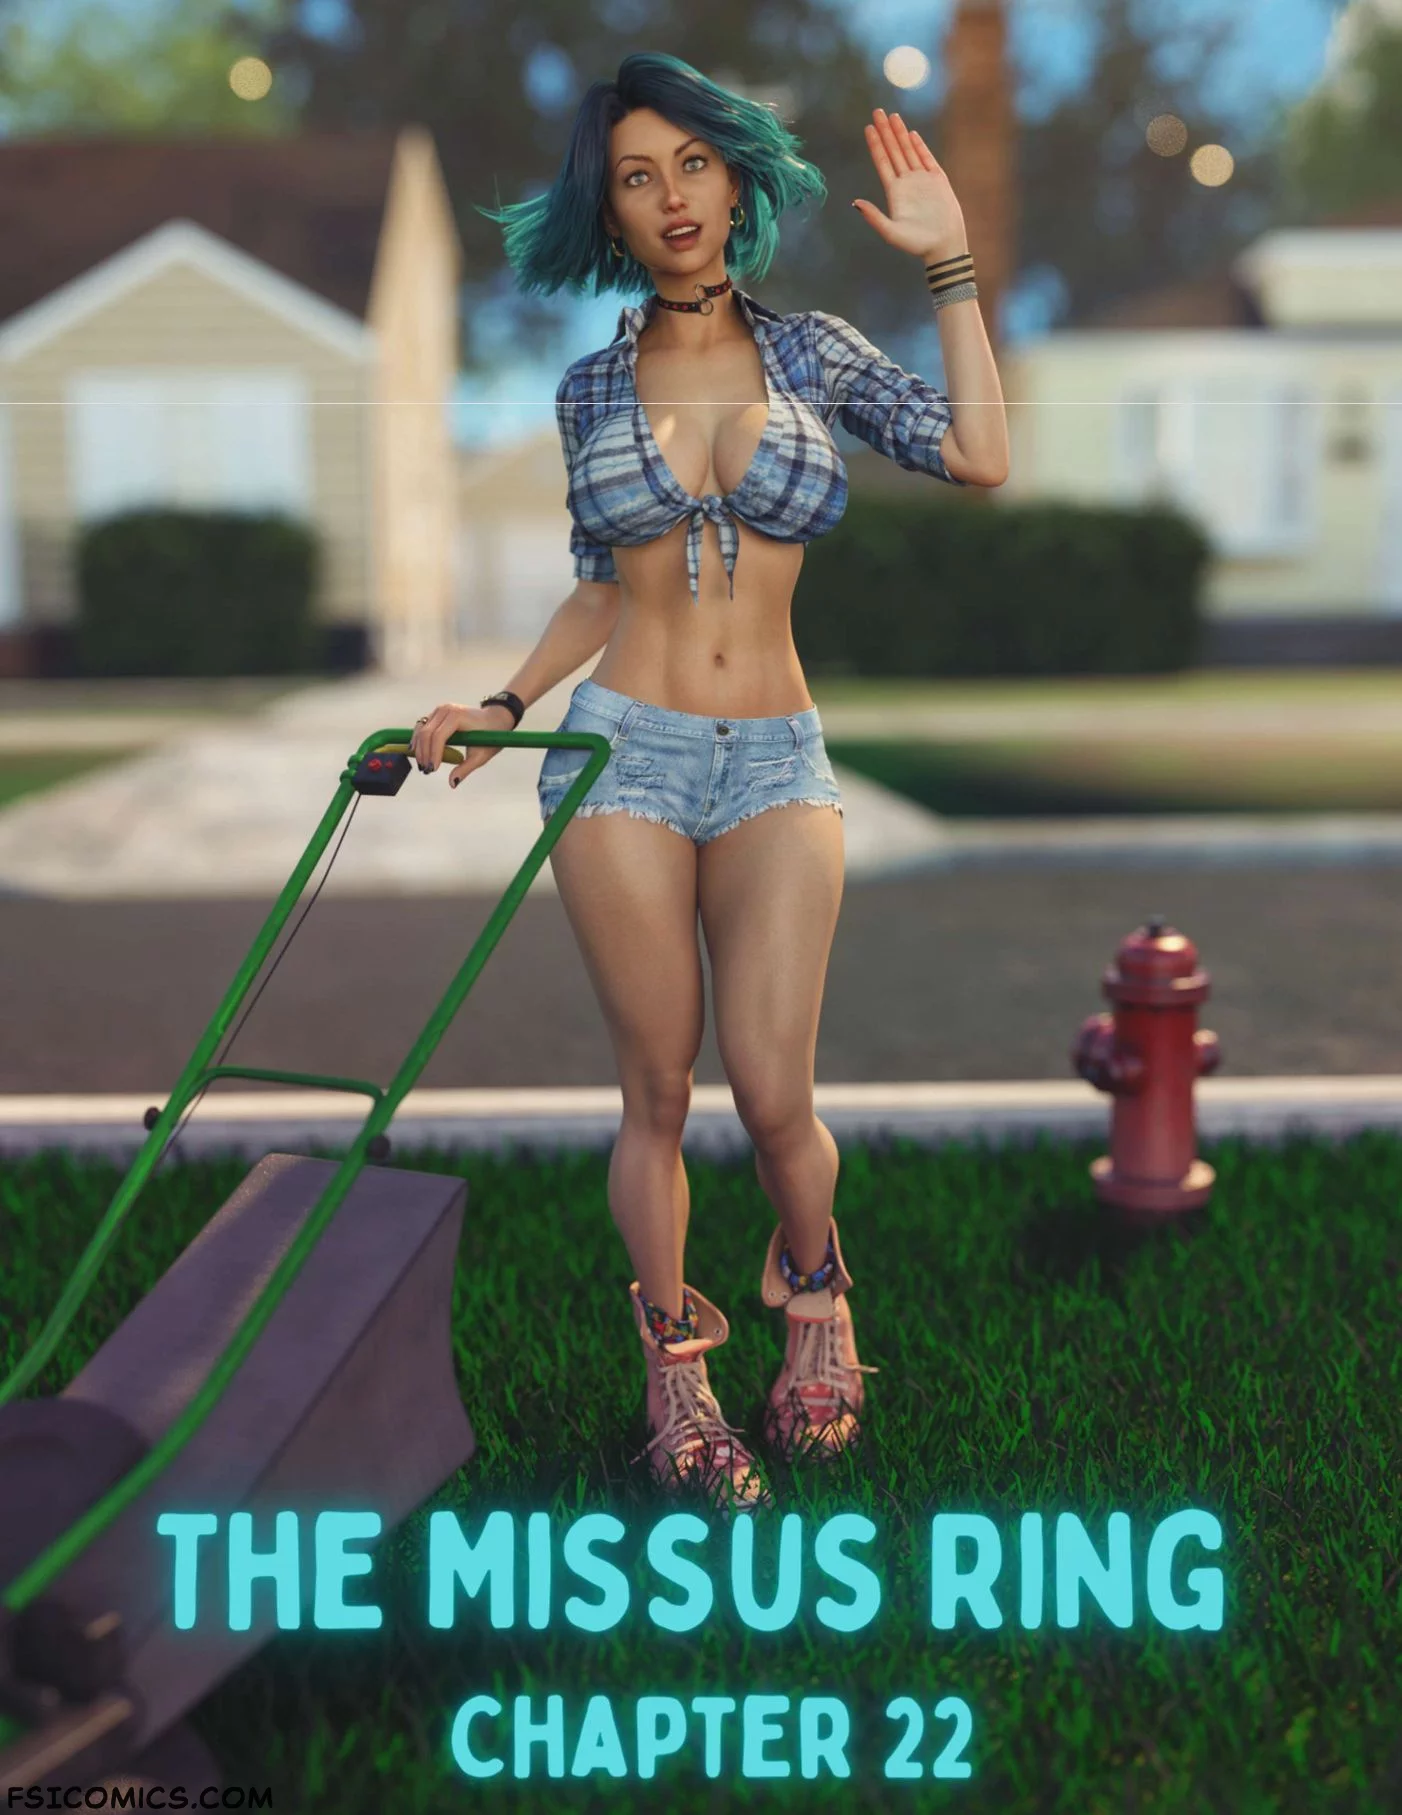 The Missus Ring Chapter 22 - Lexx228 | RawlyRawls - 69 - FSIComics